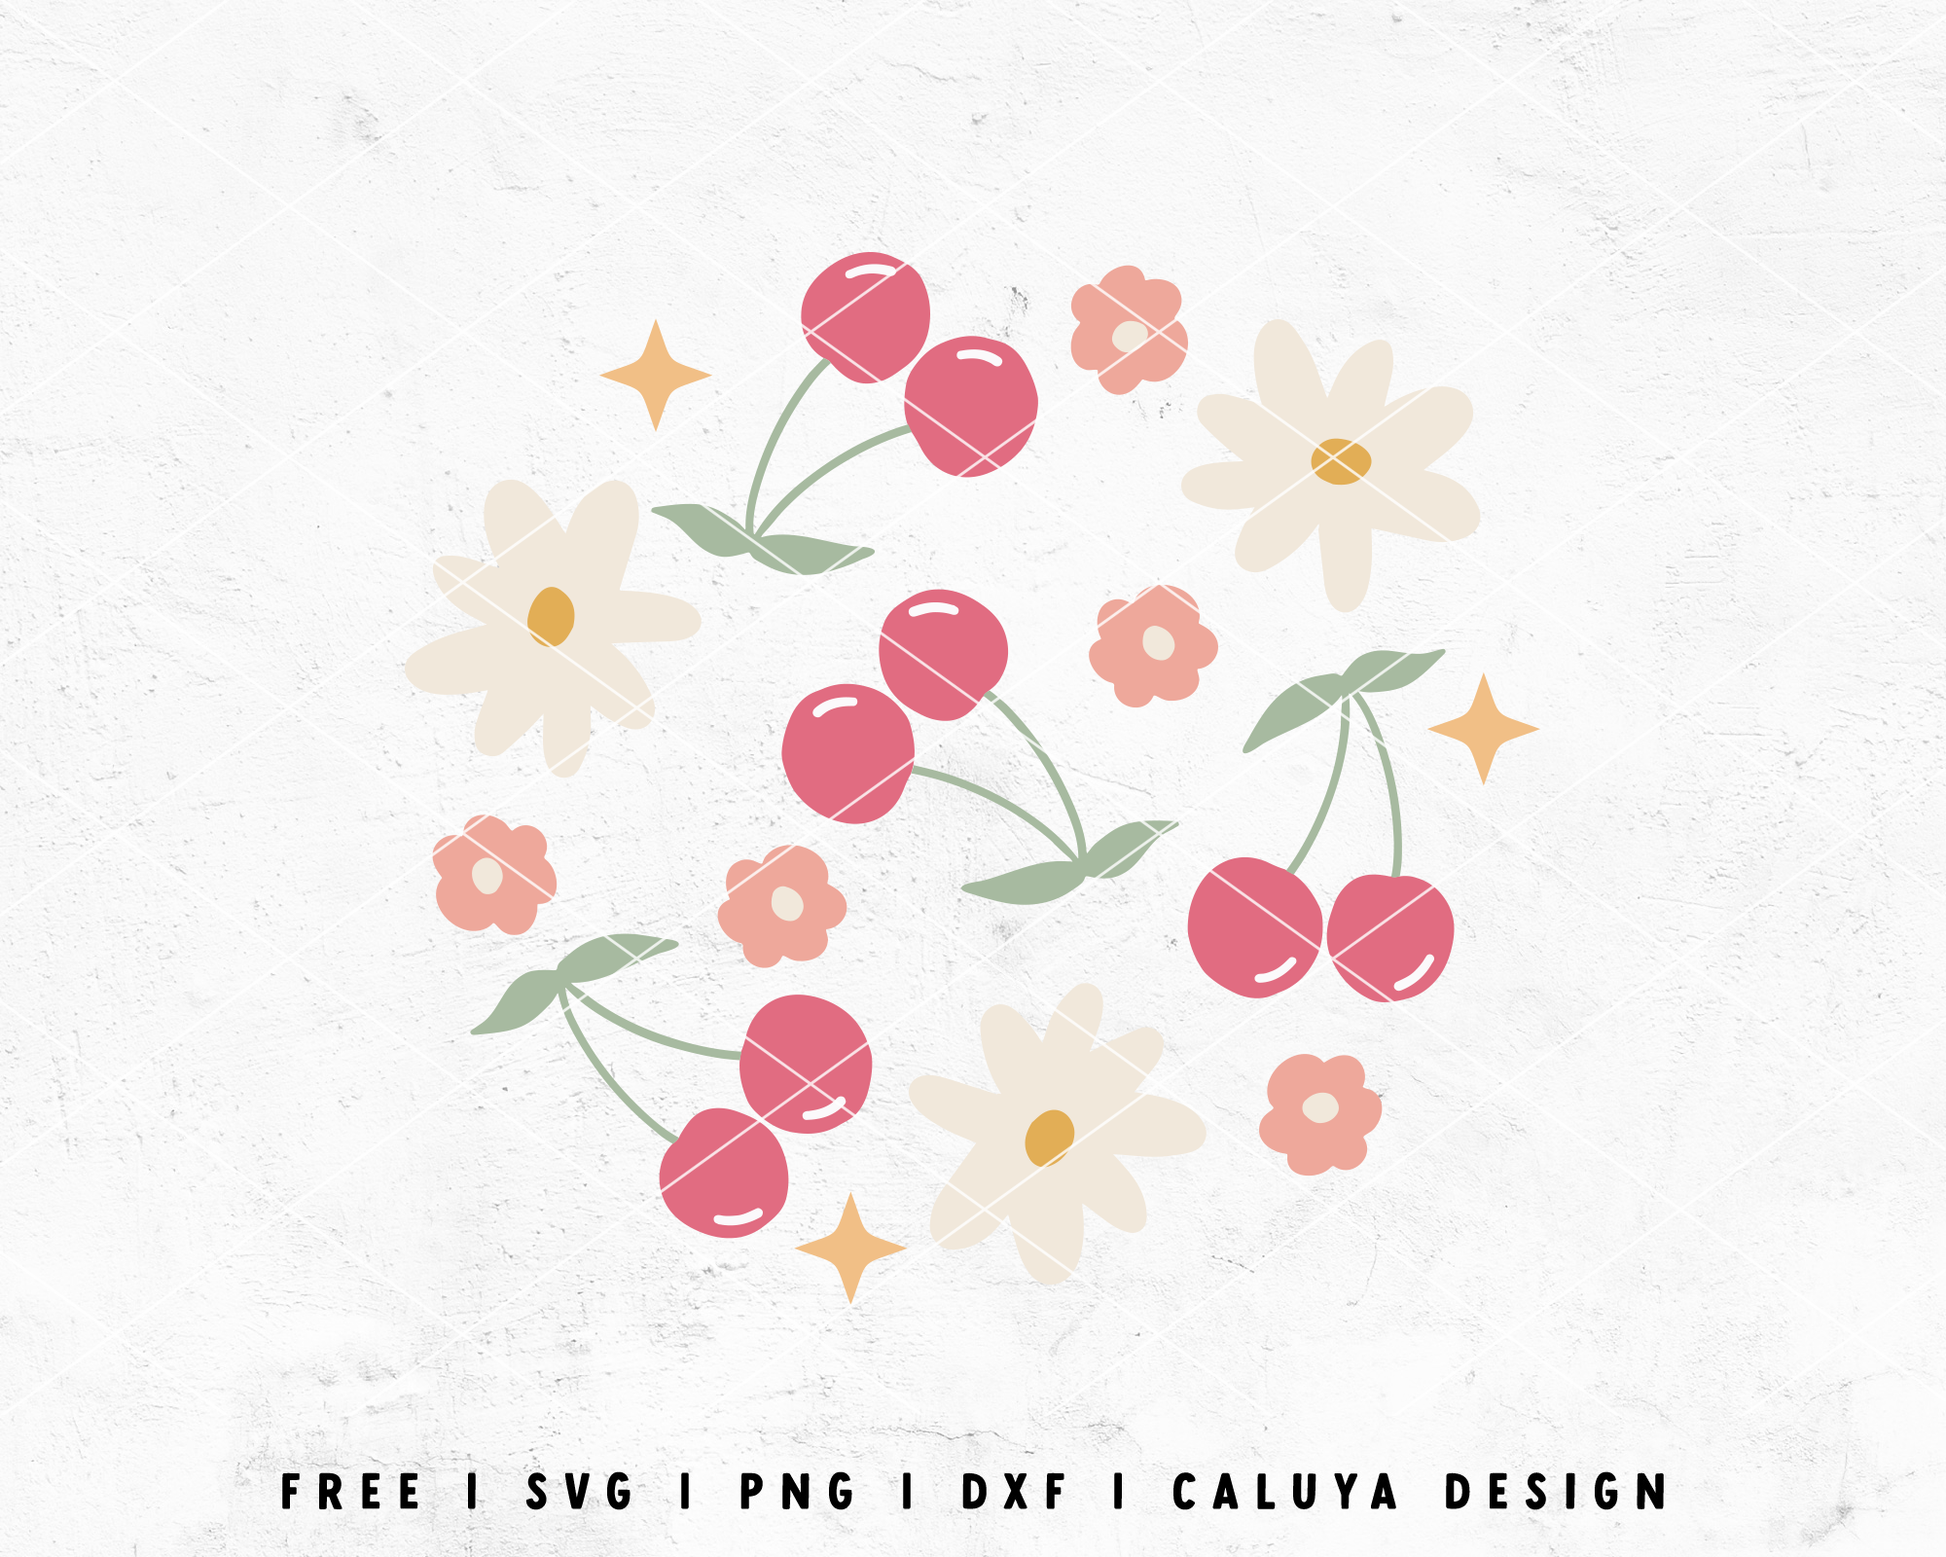 FREE Cherry SVG | Cute Cherry Set SVG Cut File for Cricut, Cameo Silhouette | Free SVG Cut File